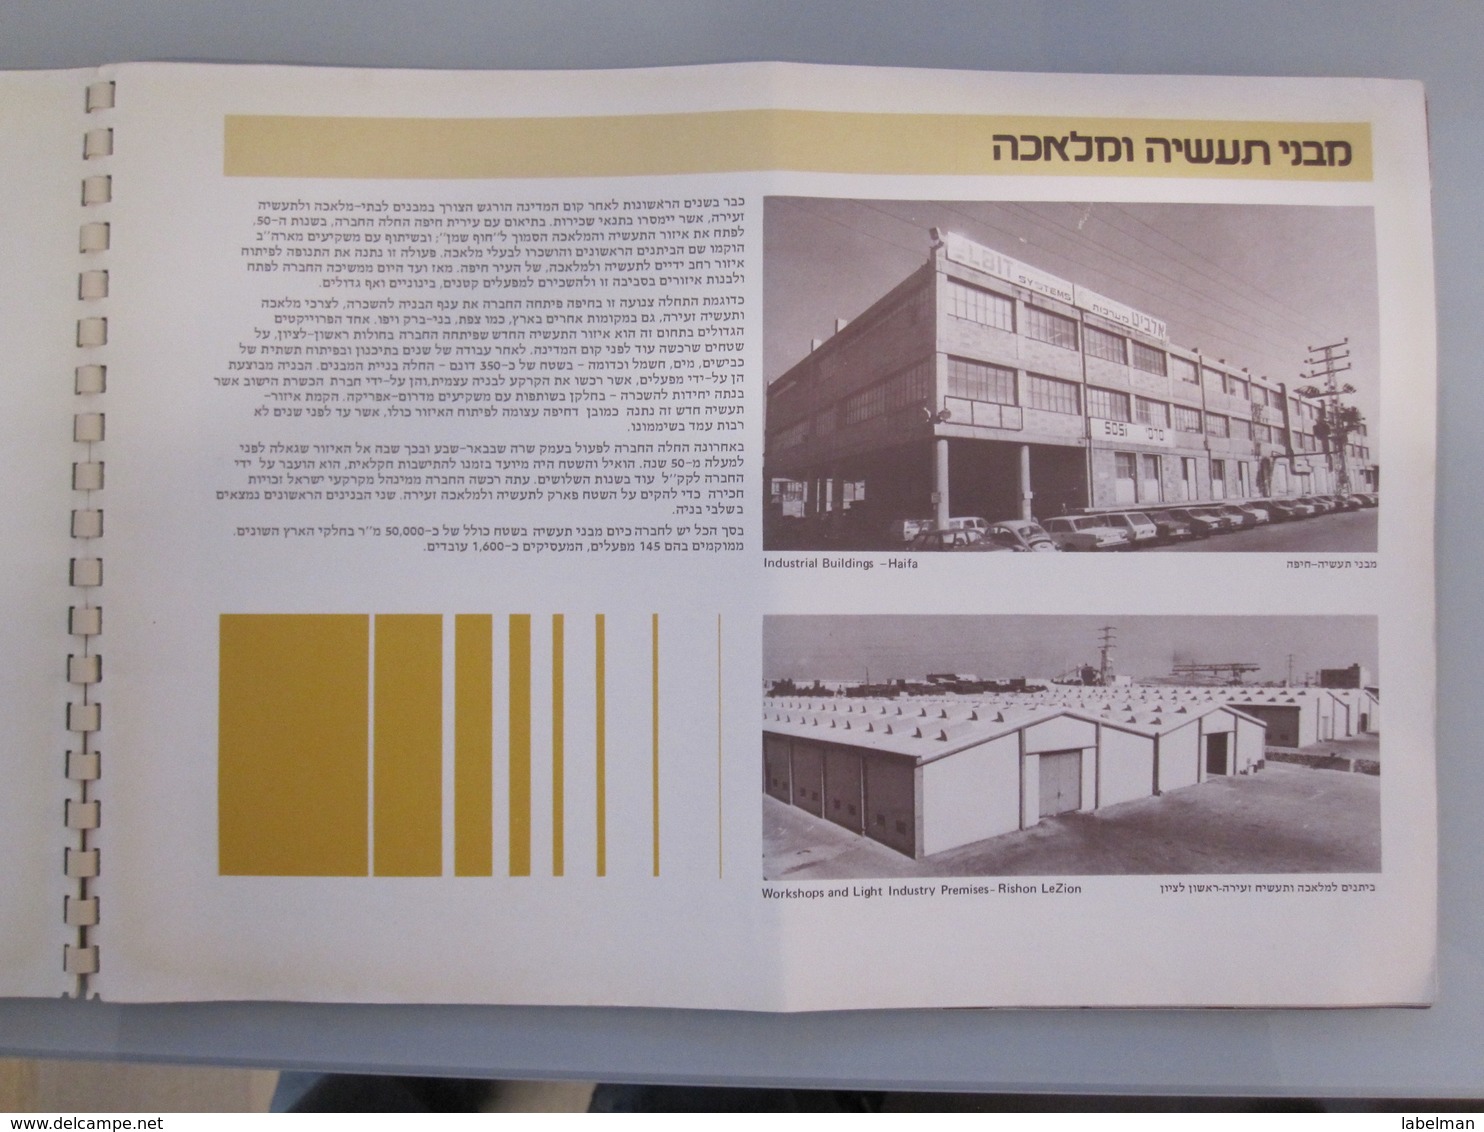 ISRAEL 70 YEARS HACHSHARAT HAYISHUV LAND DEVELOPMENT VINTAGE MAGAZINE ADVERTISING DESIGN ORIGINAL